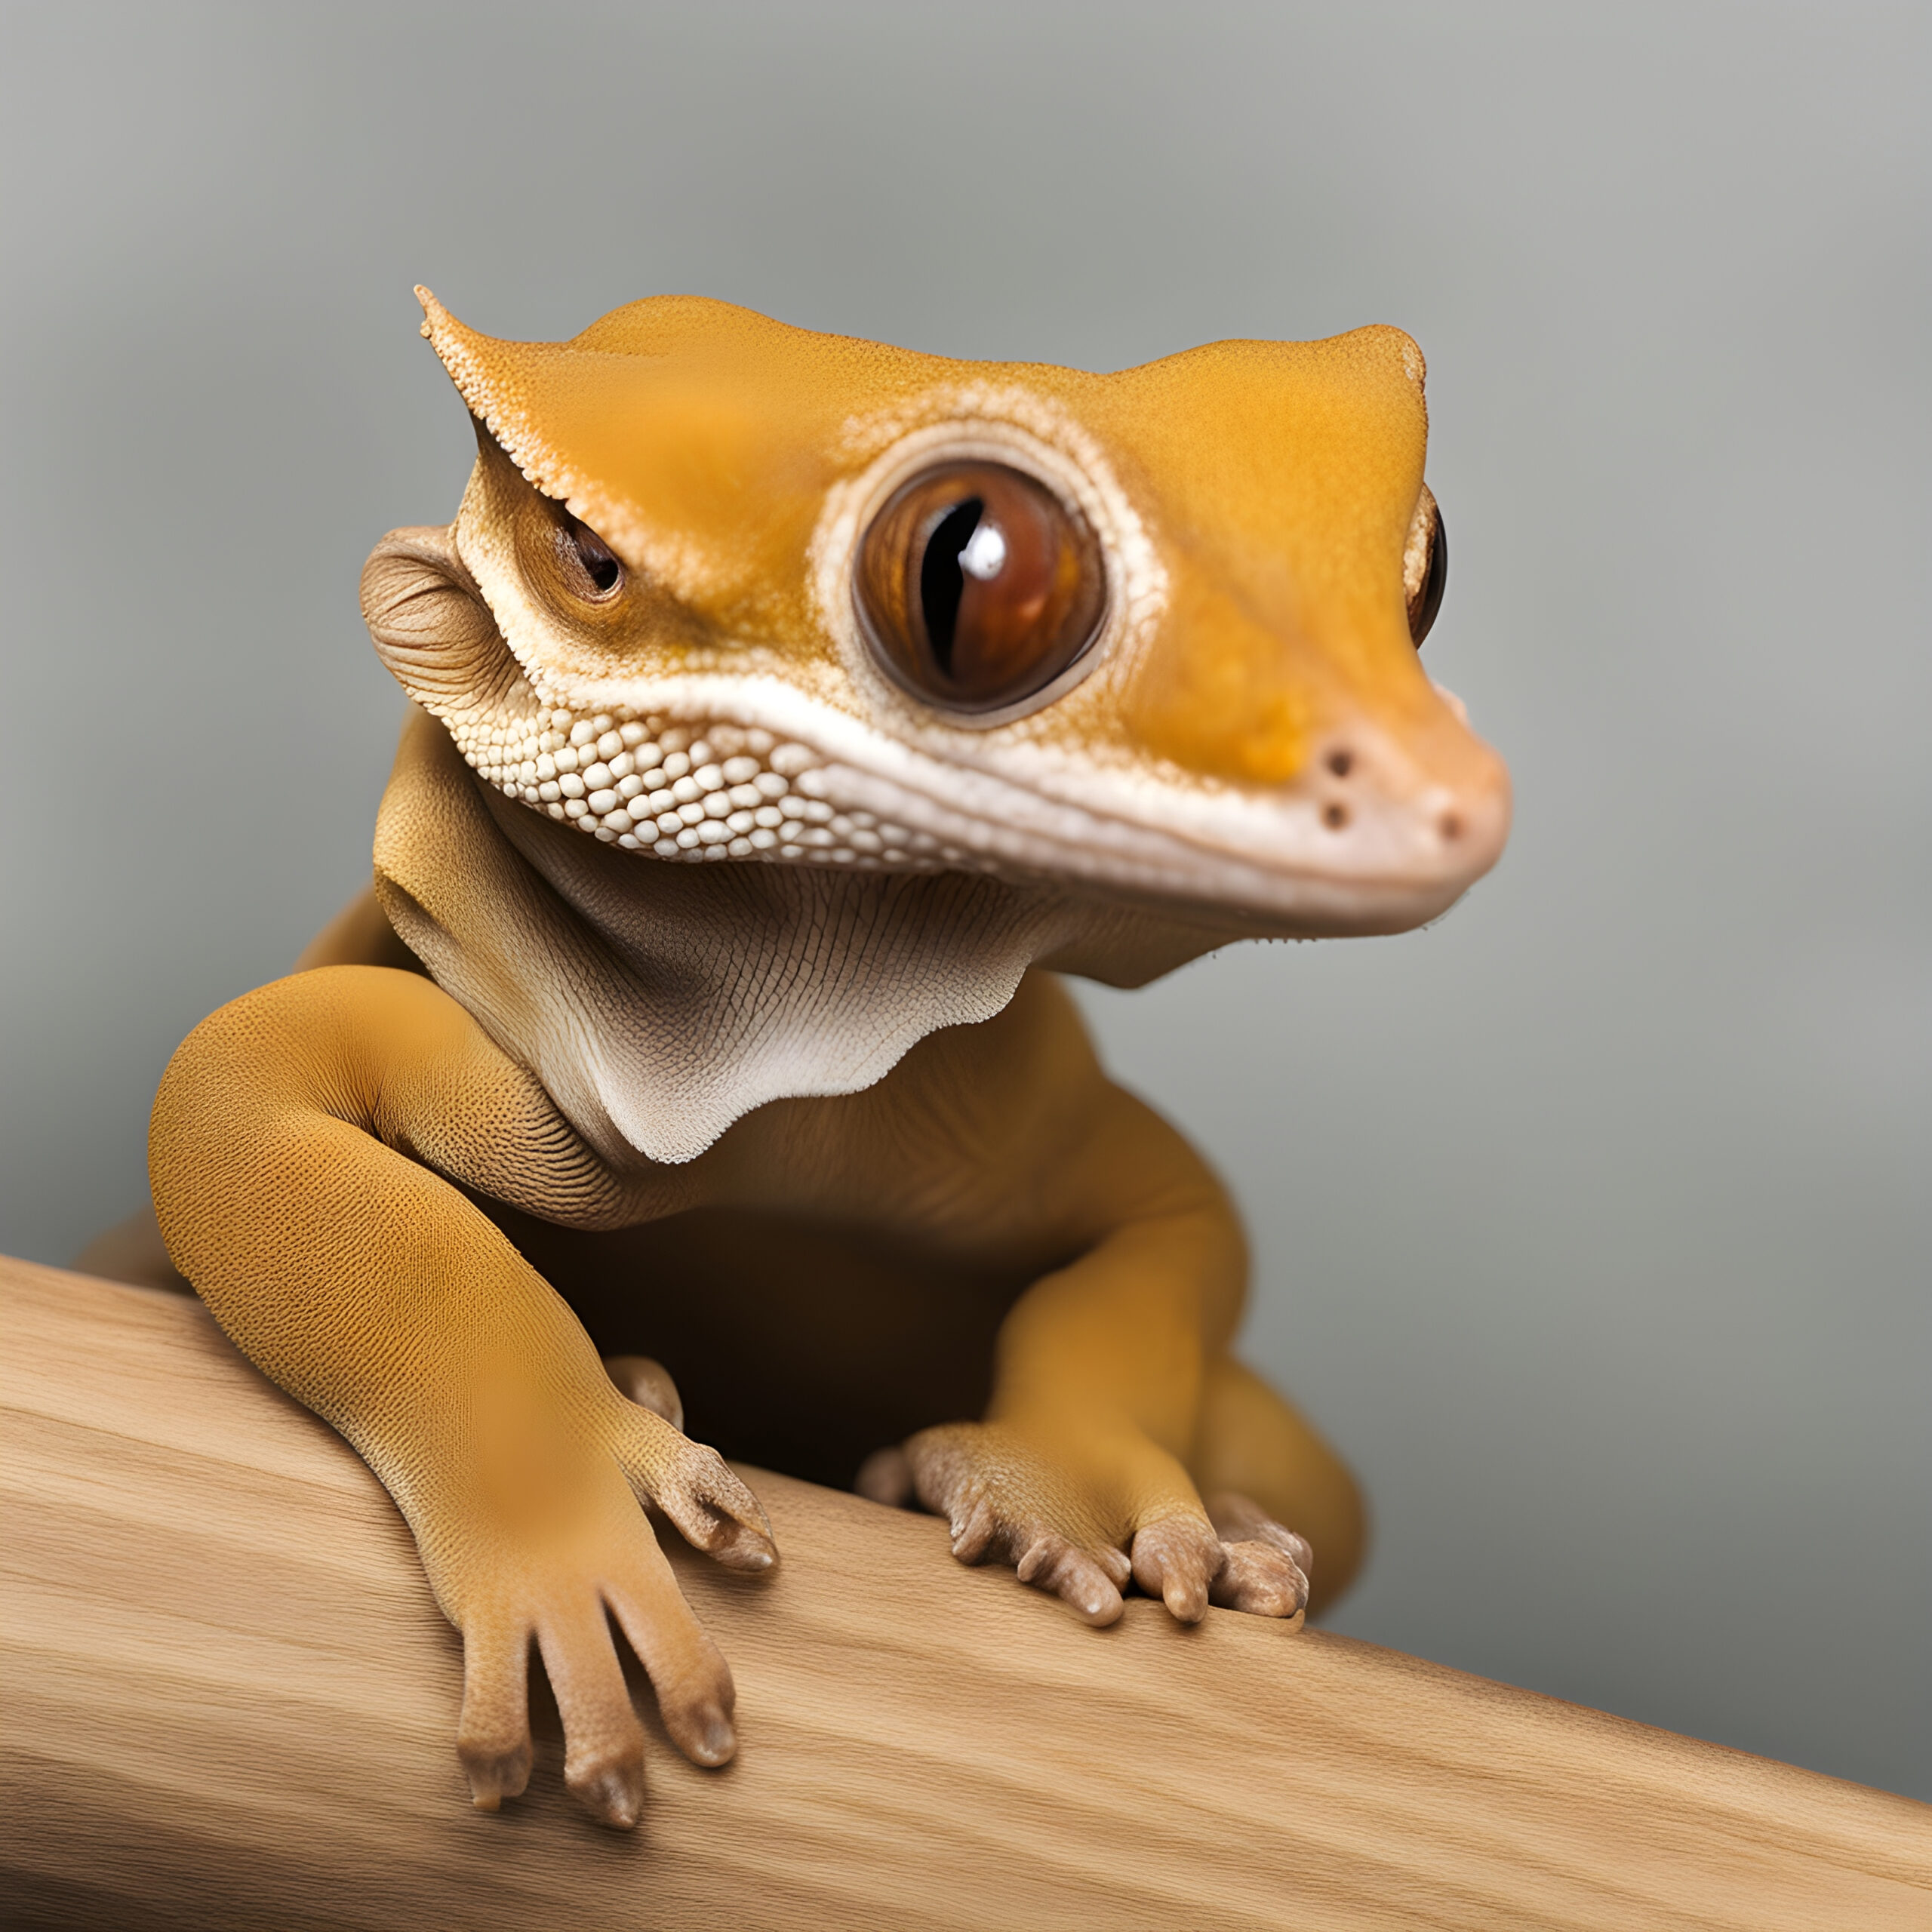 Crested Gecko Behavior and Communication: